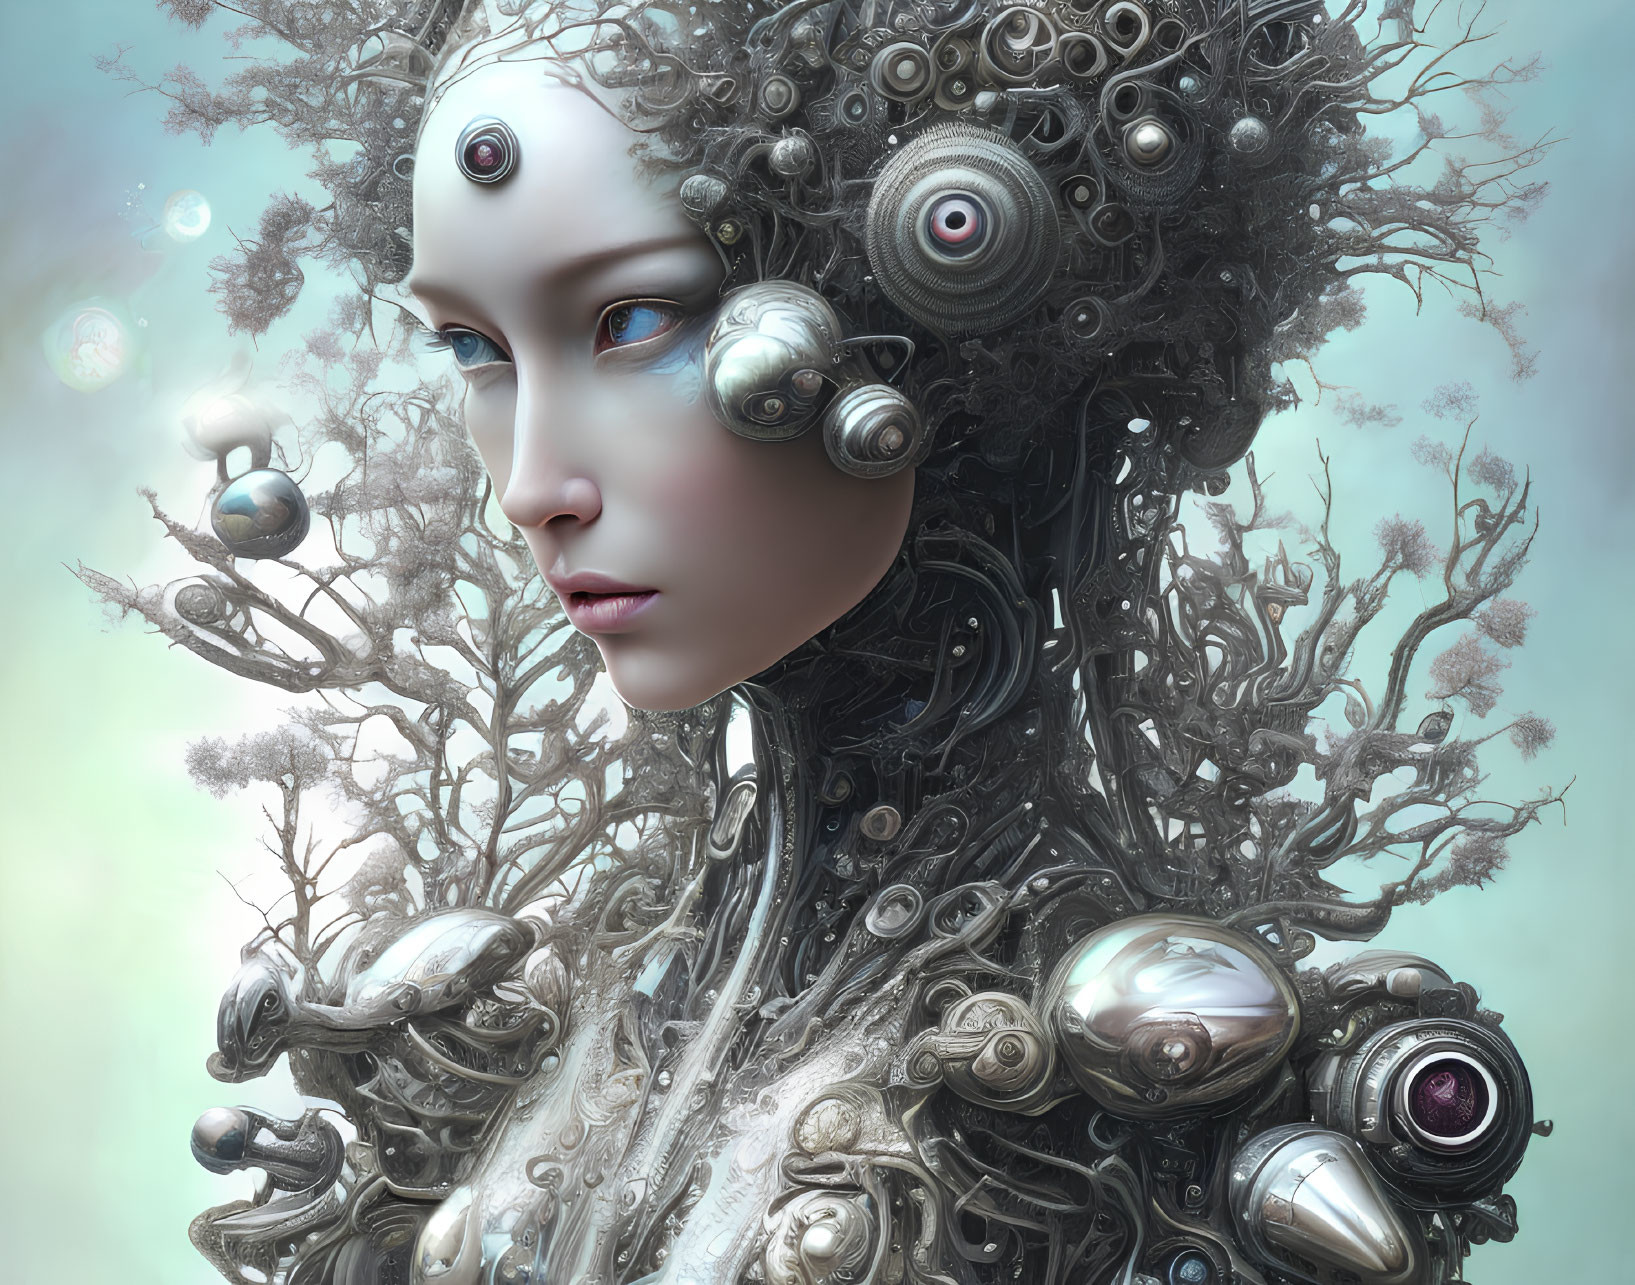 Surreal humanoid figure with ornate mechanical headdress and tree-like elements